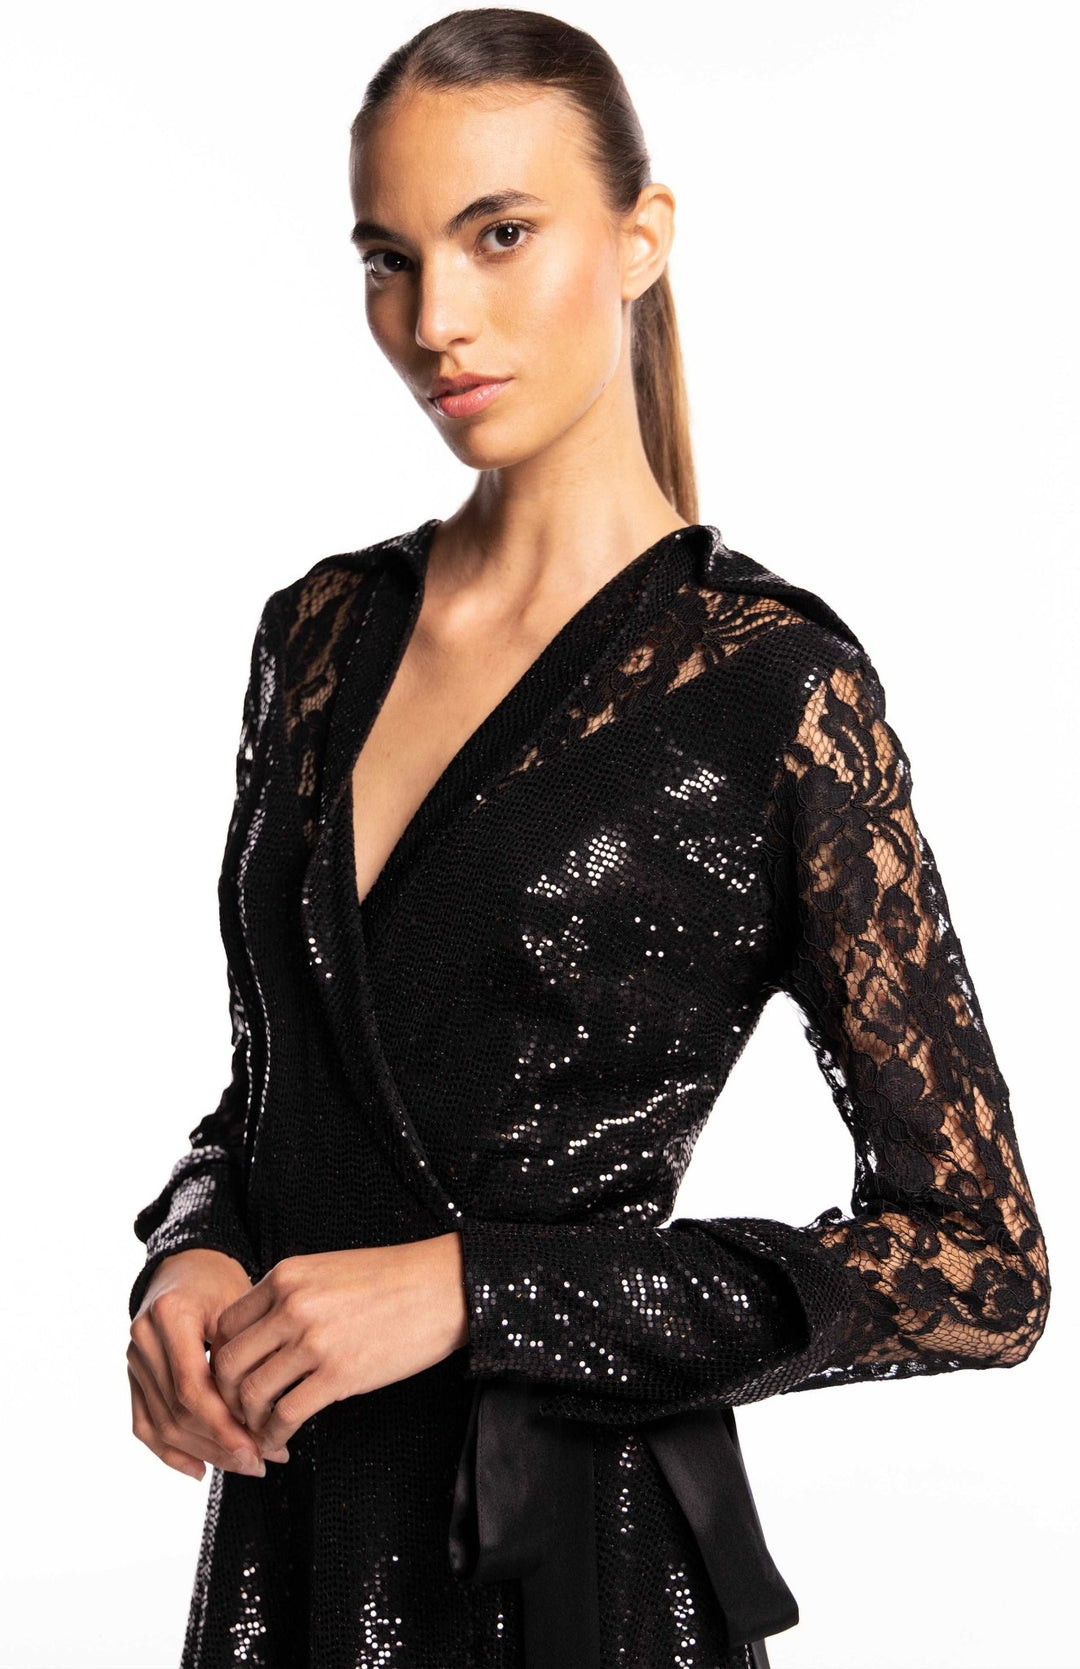 elegant black cocktail dress